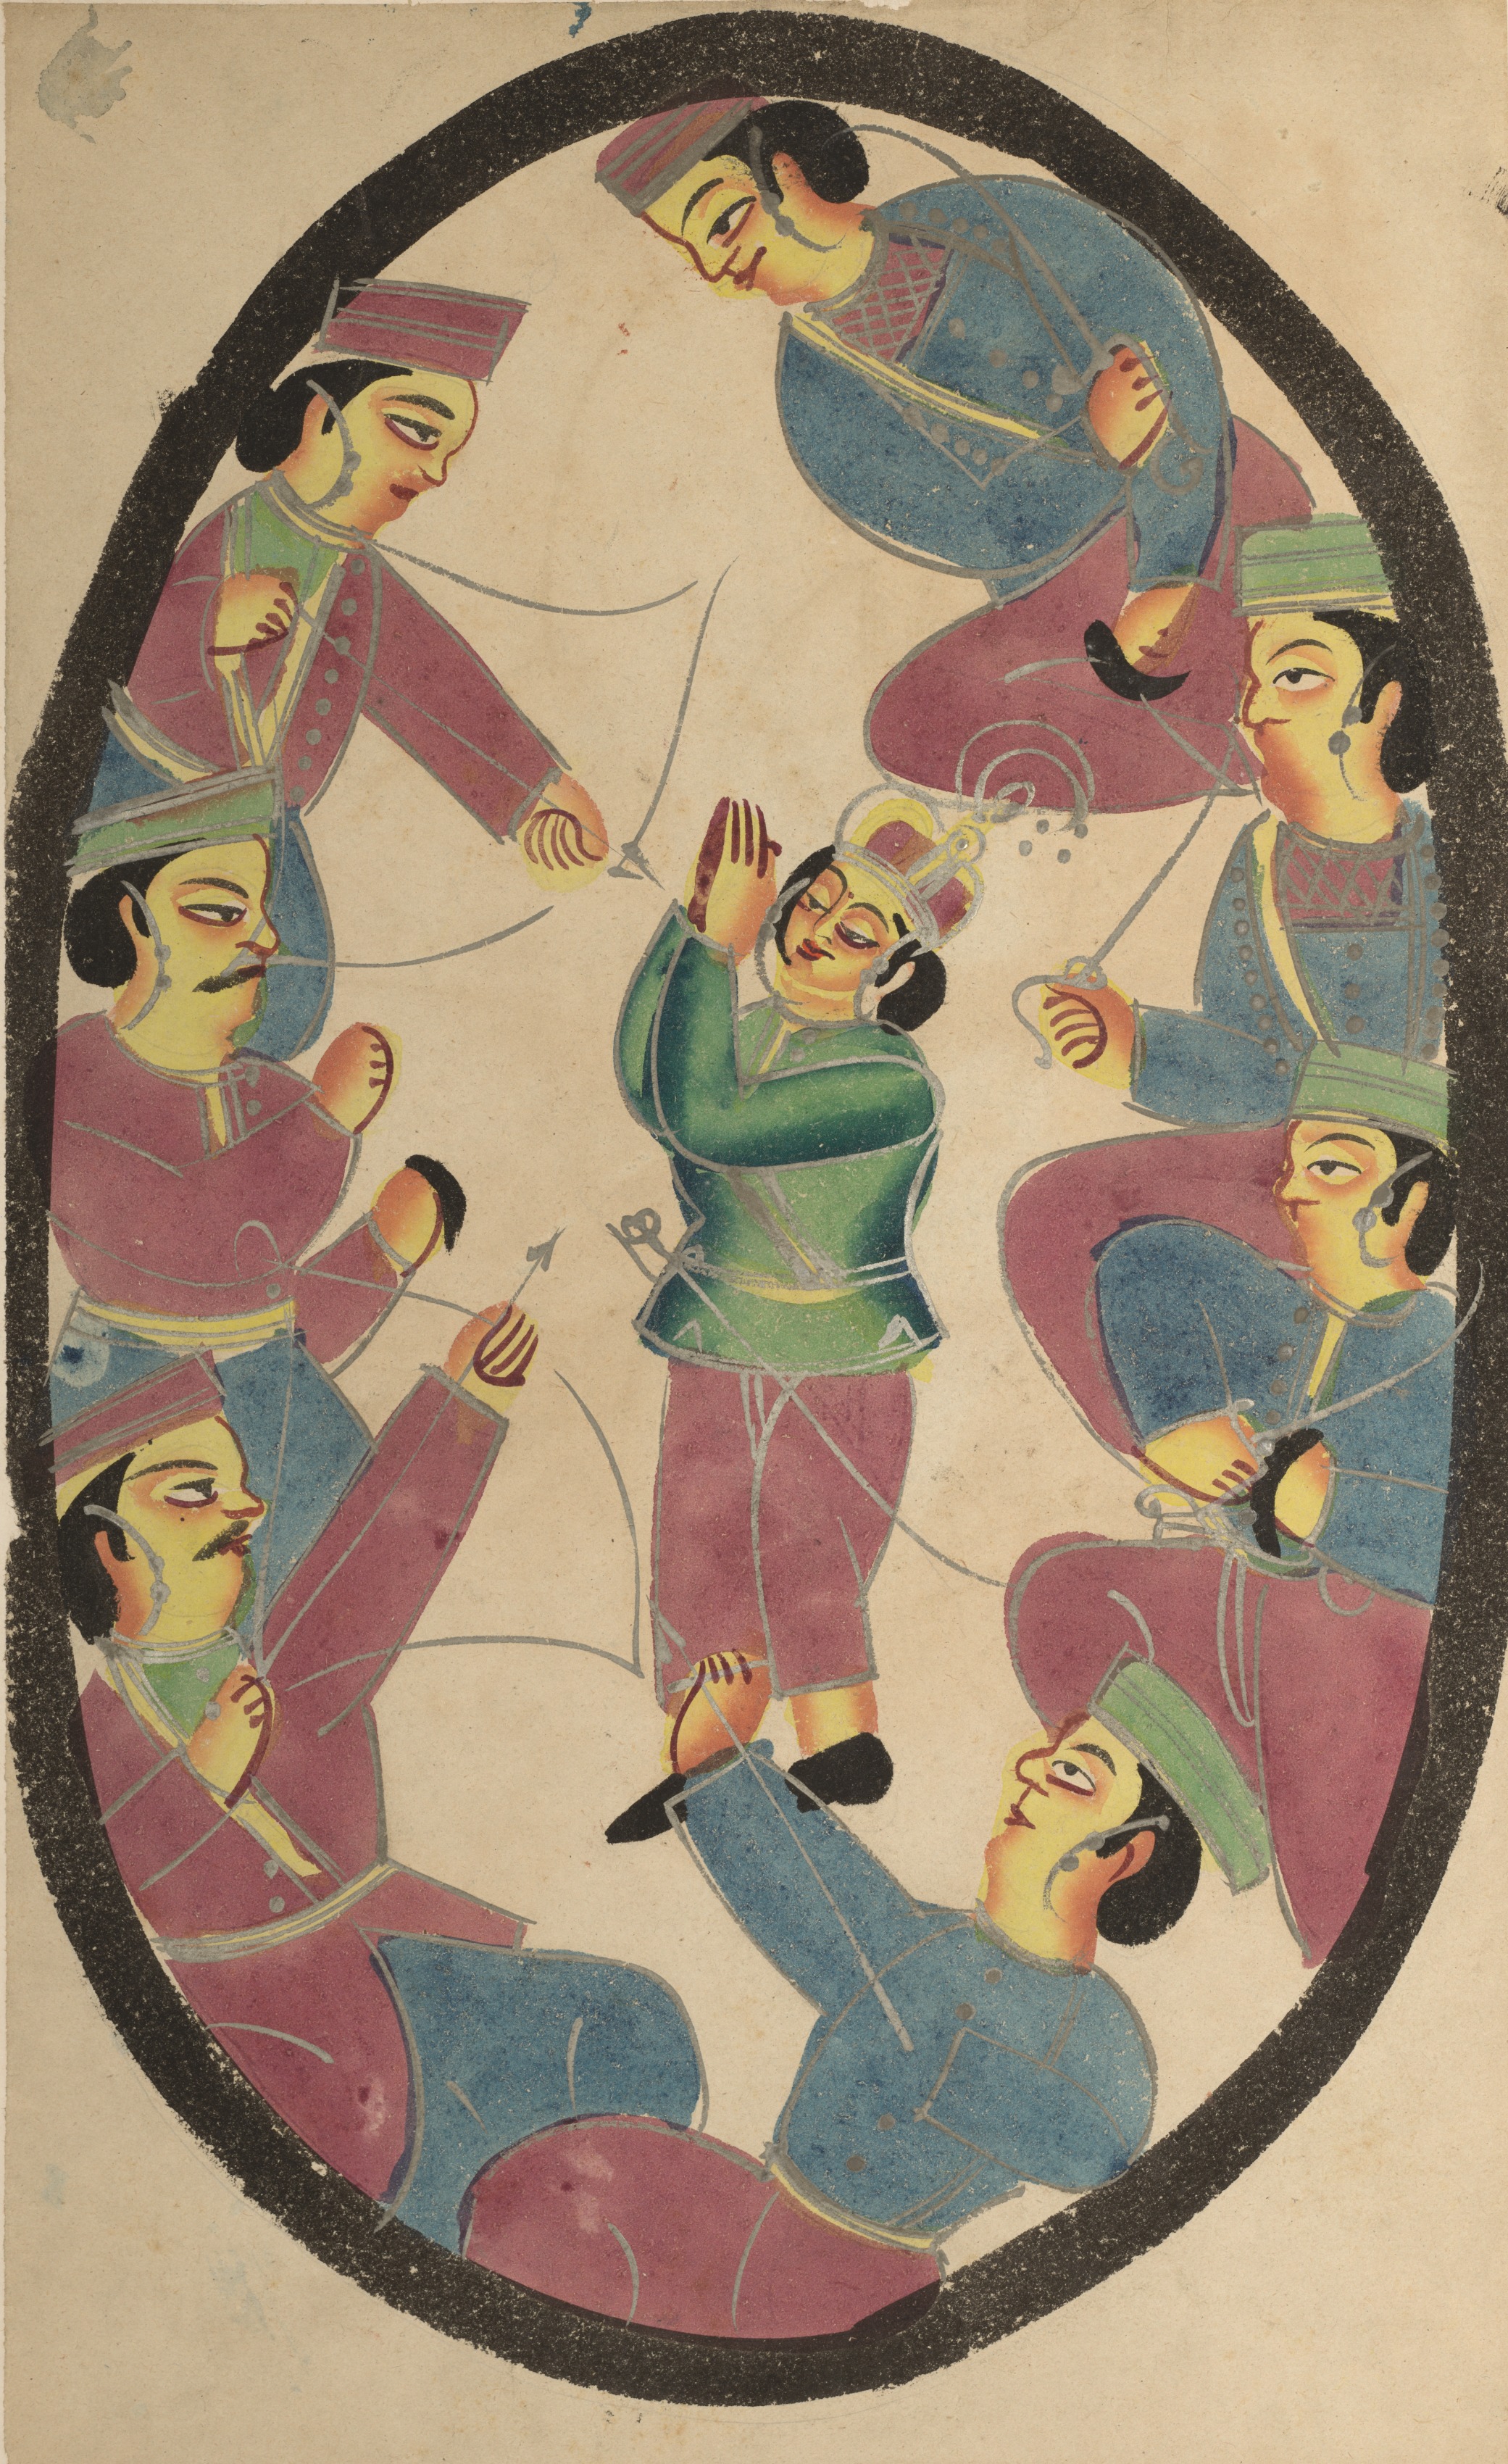 Seven Heroes or Warriors Killing Abhimanya, Son of Arjuna